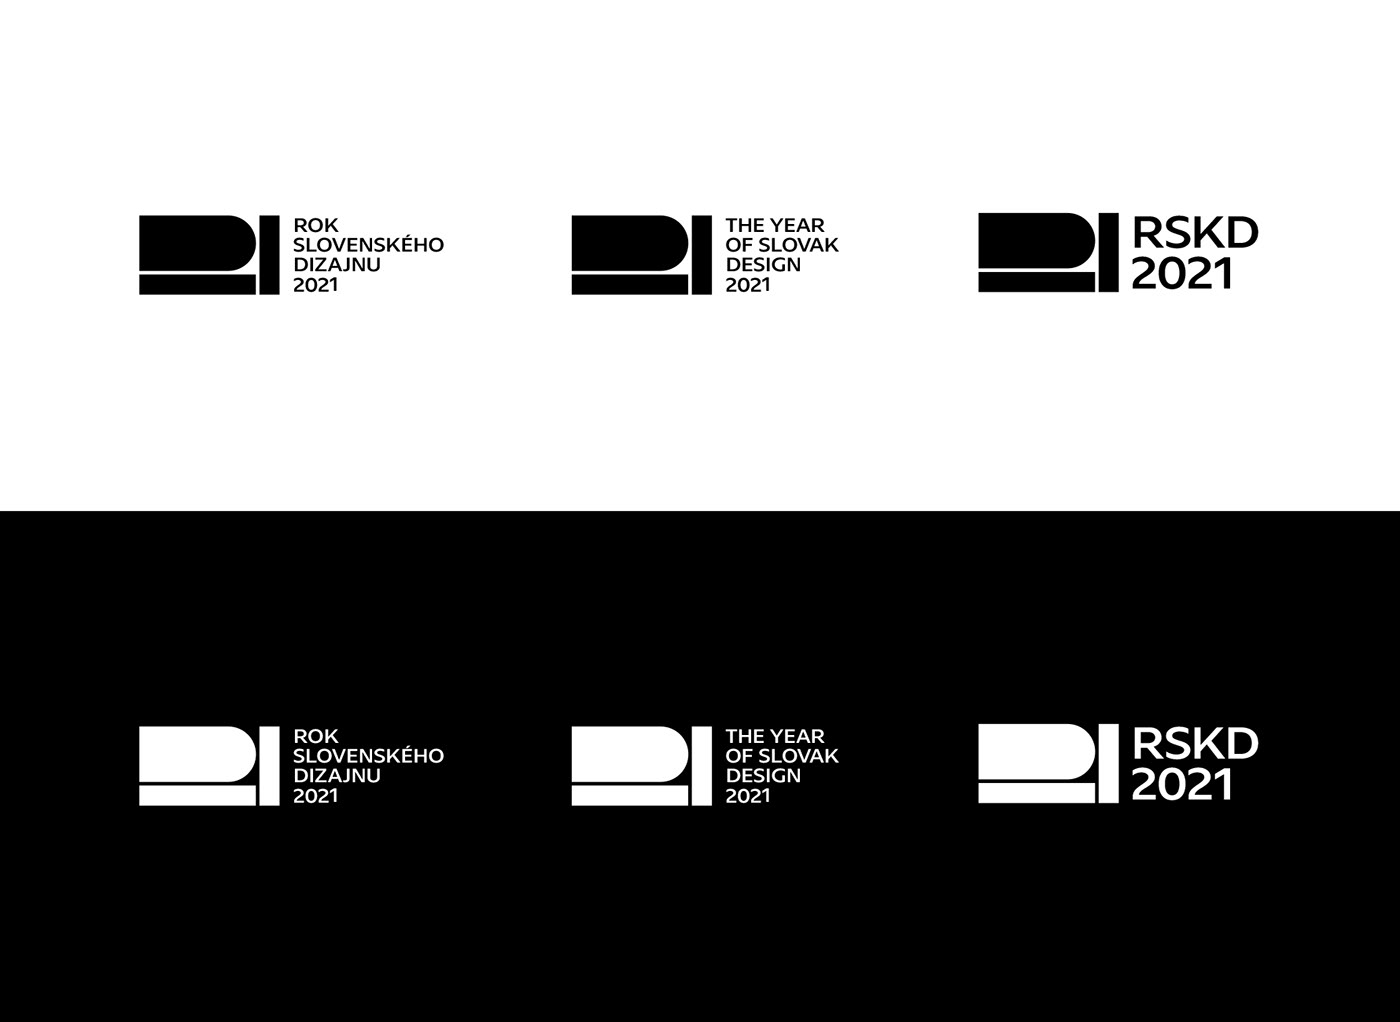 21 logo bauhaus black and white design 2021 design week event identity festival monochrome slovak design typography  